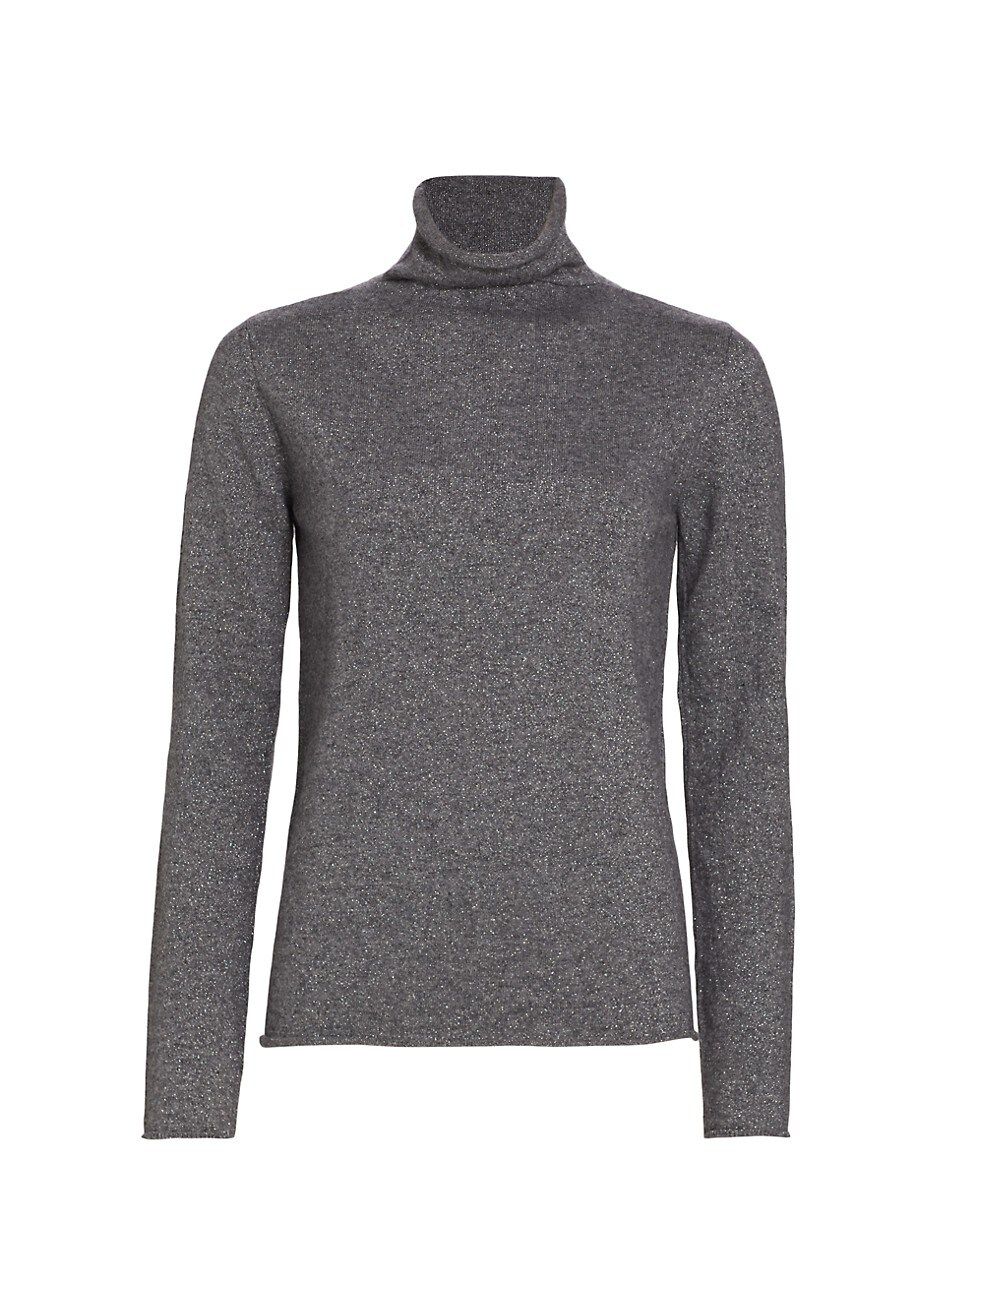 Saks Fifth Avenue COLLECTION Metallic Wool-Blend Turtleneck Sweater | Saks Fifth Avenue